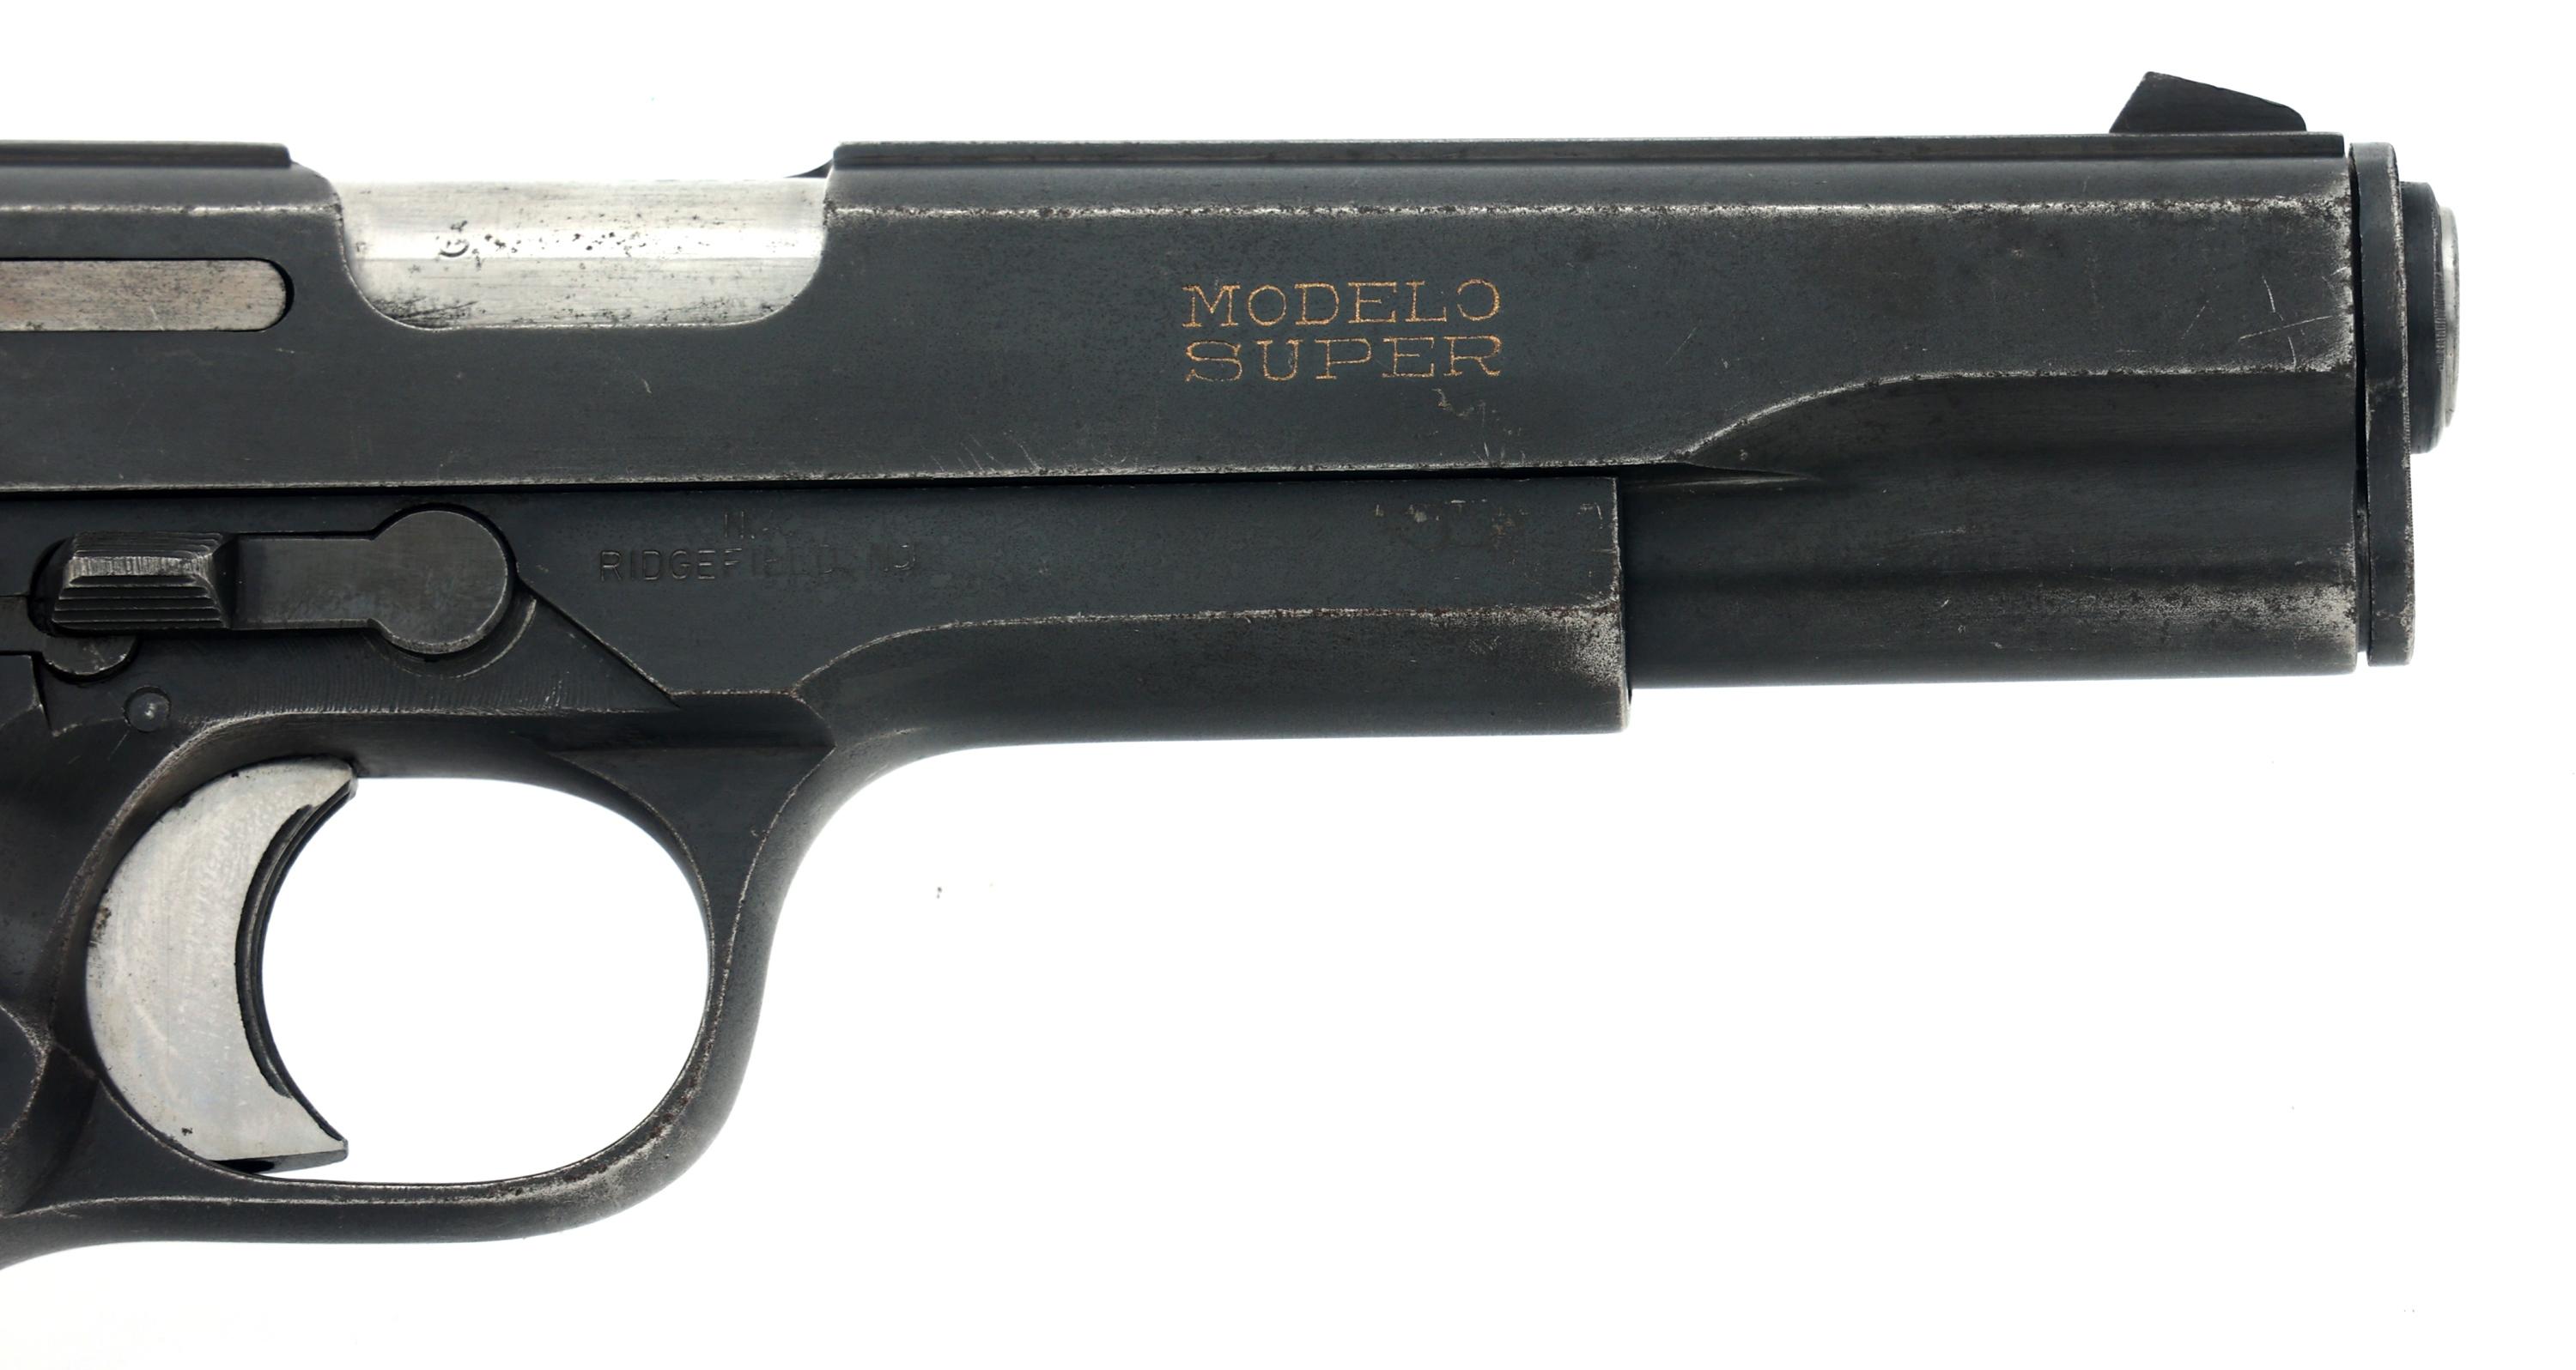 1953 STAR MODEL A SUPER 9mm LARGO CALIBER PISTOL